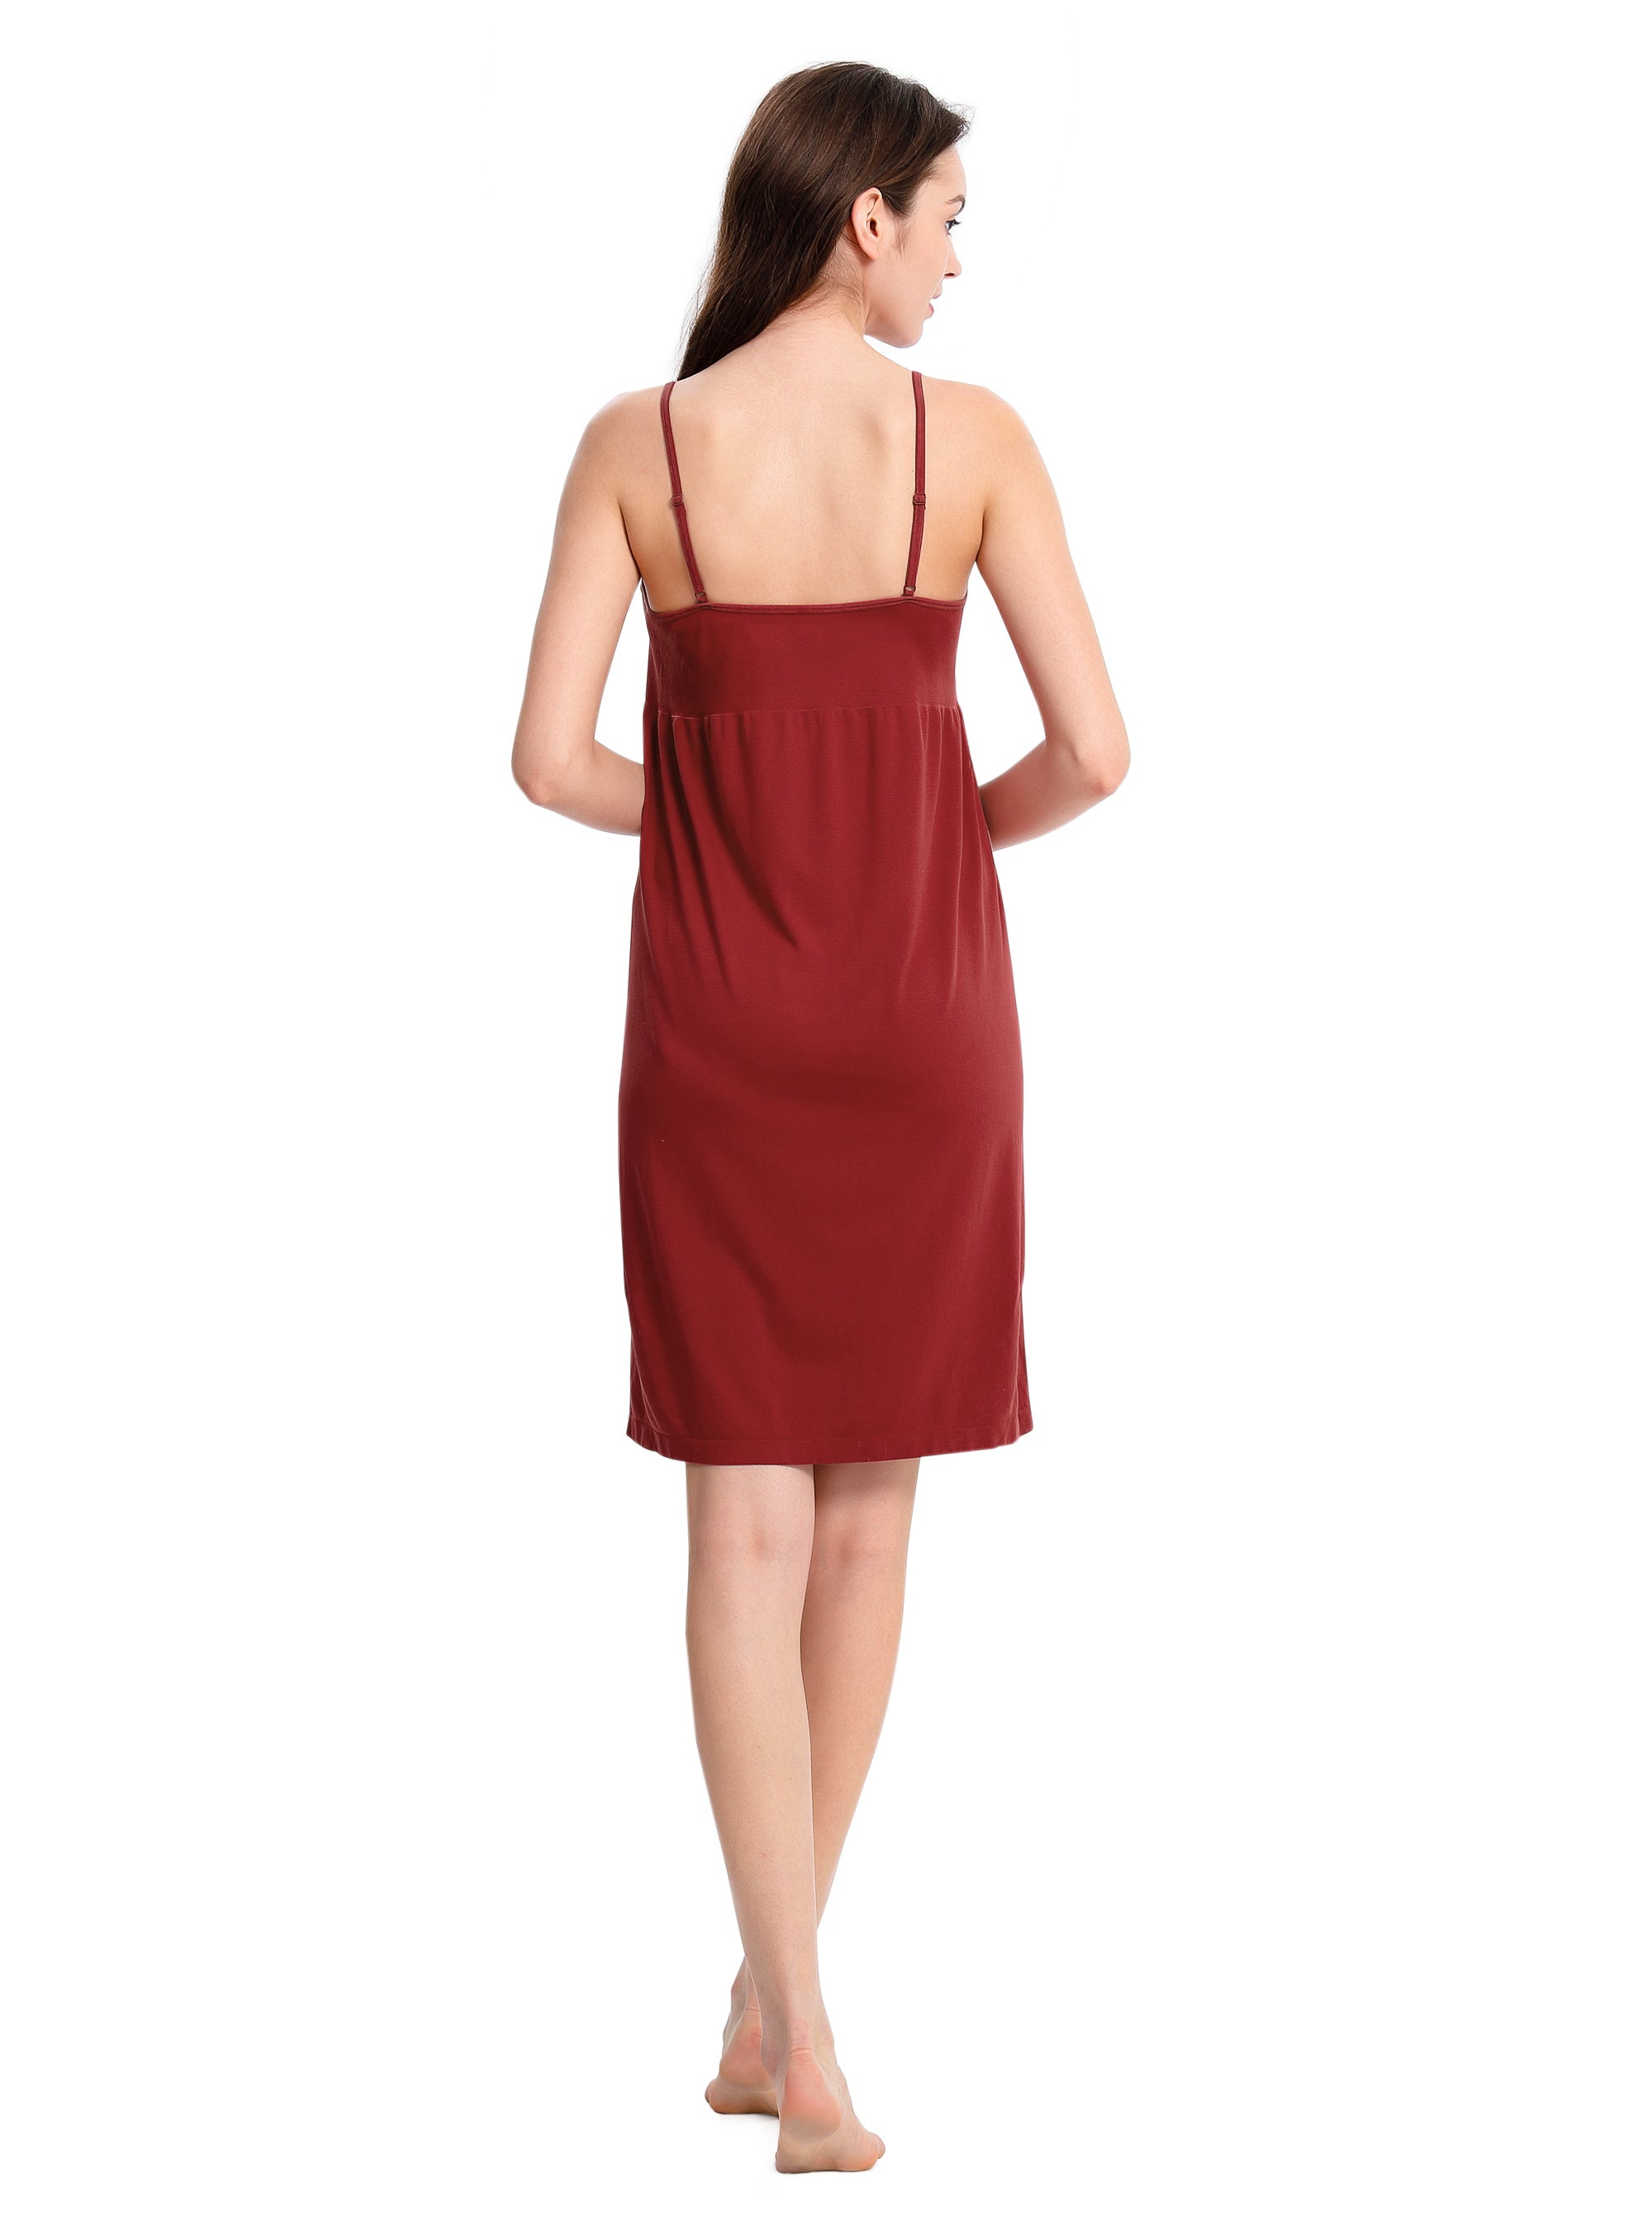 Nightgowns for Women Full Slips Dress Sleepwear 1 or 2 Pack - FemoFit